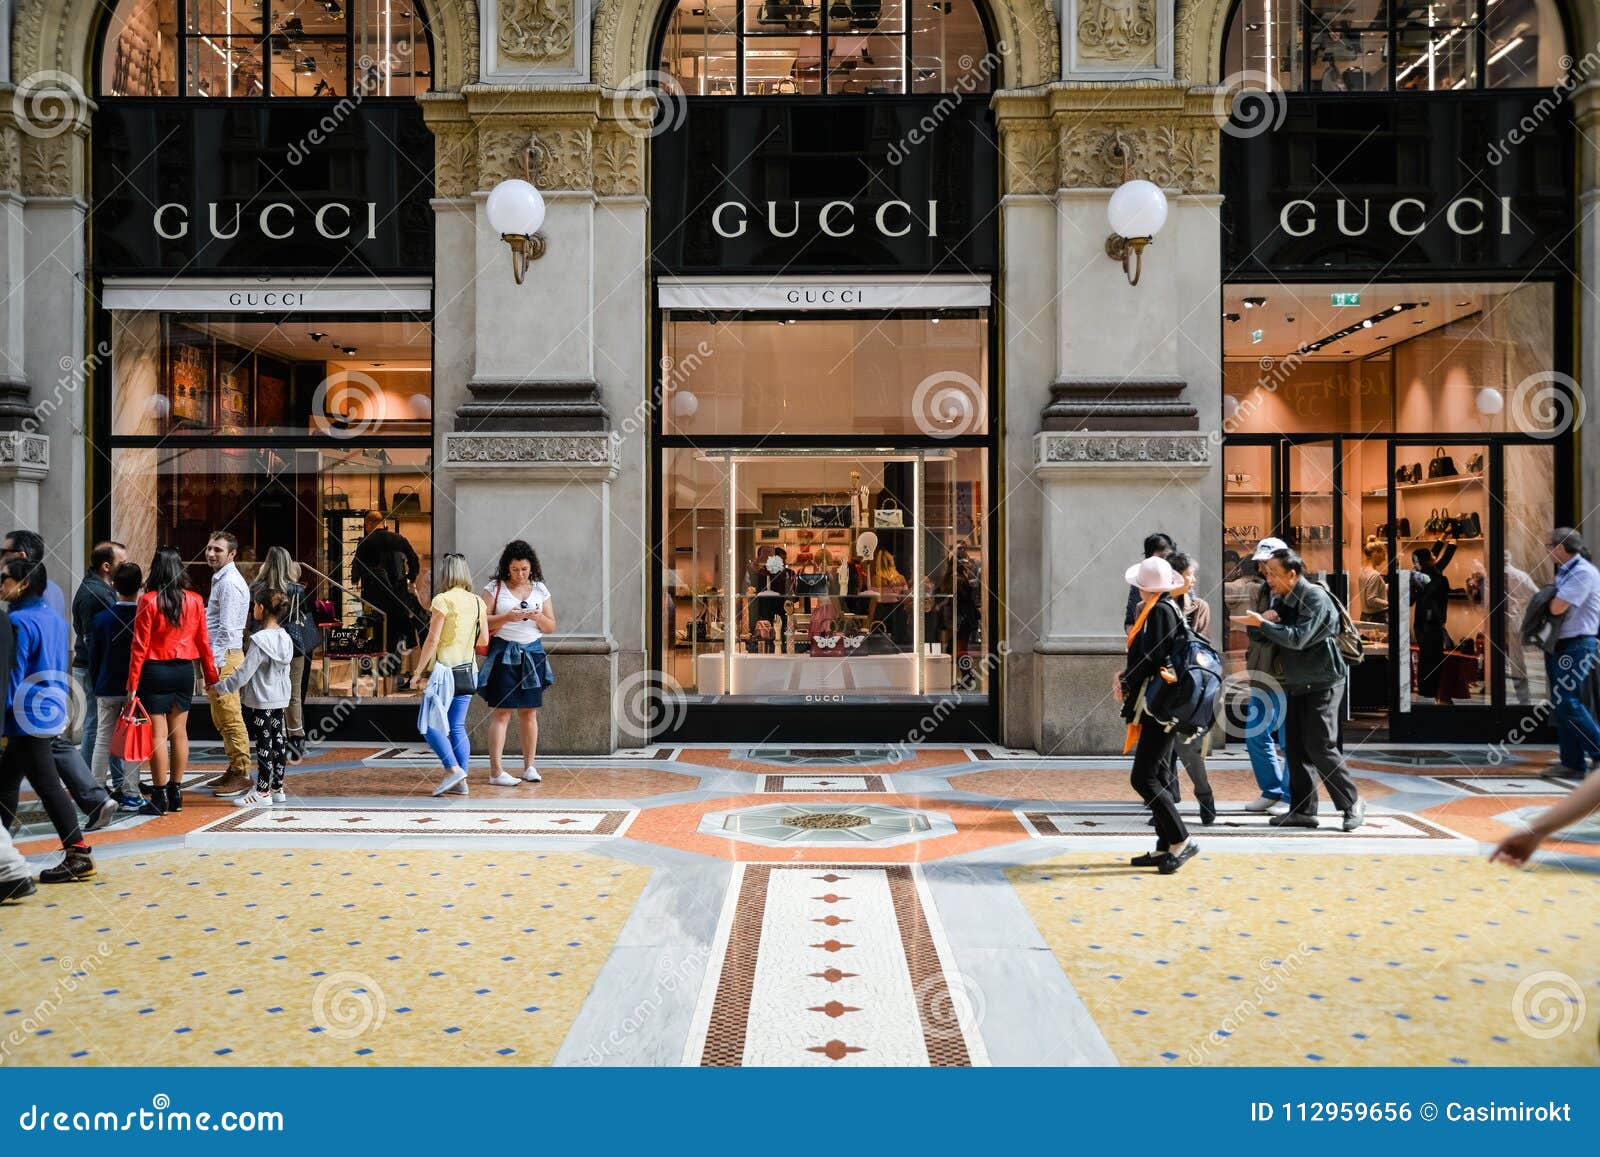 Civic adgang Orientalsk Milan, Italy - September 24, 2017: Gucci Store in Milan. Fashio Editorial  Photo - Image of elegant, casual: 112959656